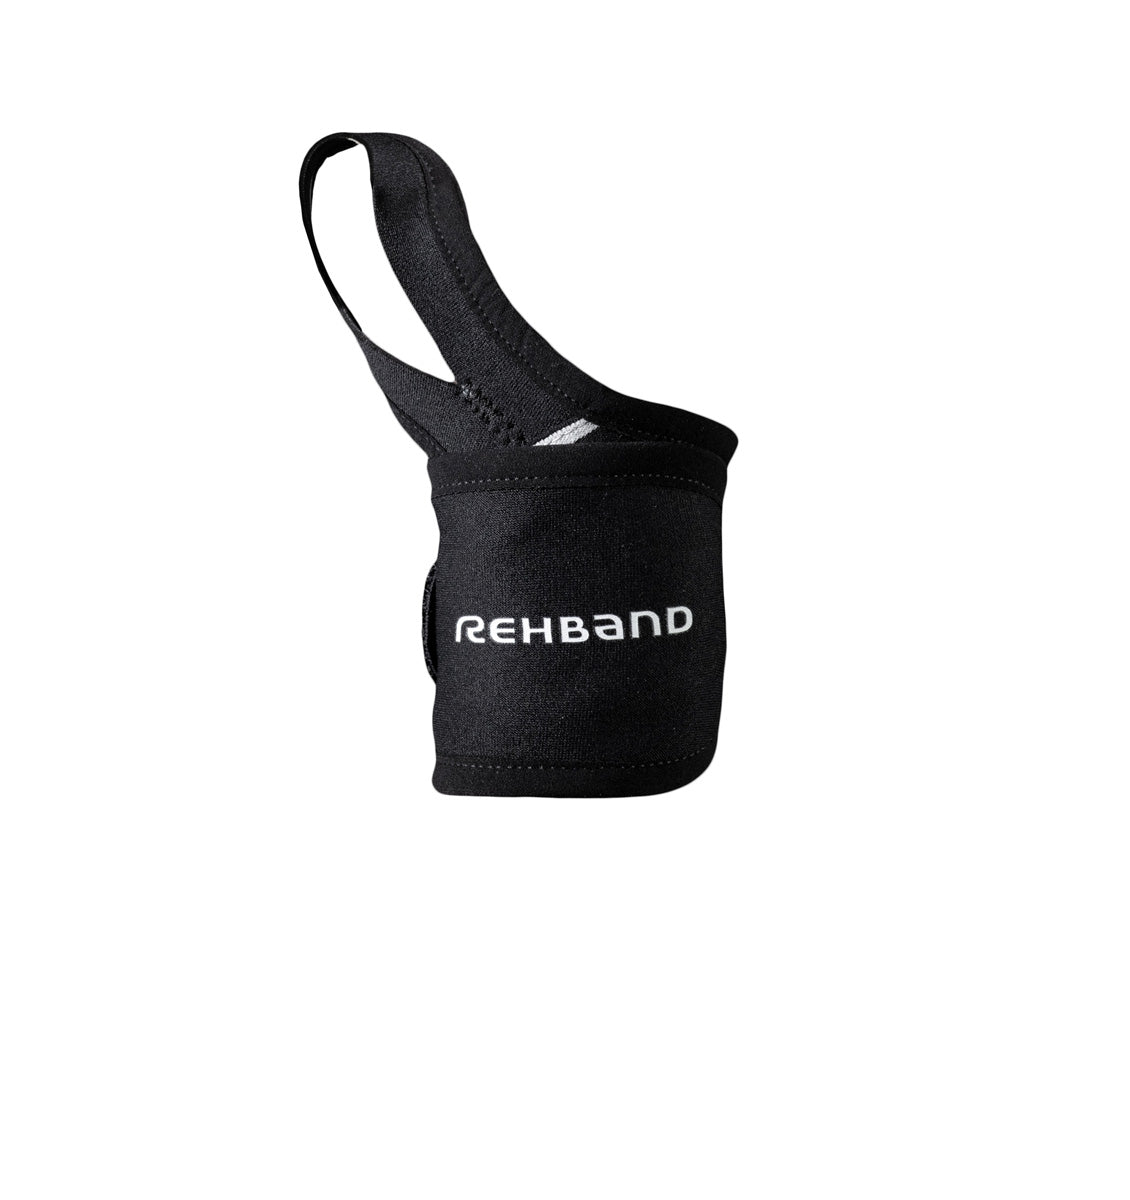 111206-01 Rehband QD Wrist & Thumb Support Black 1.5mm - Front